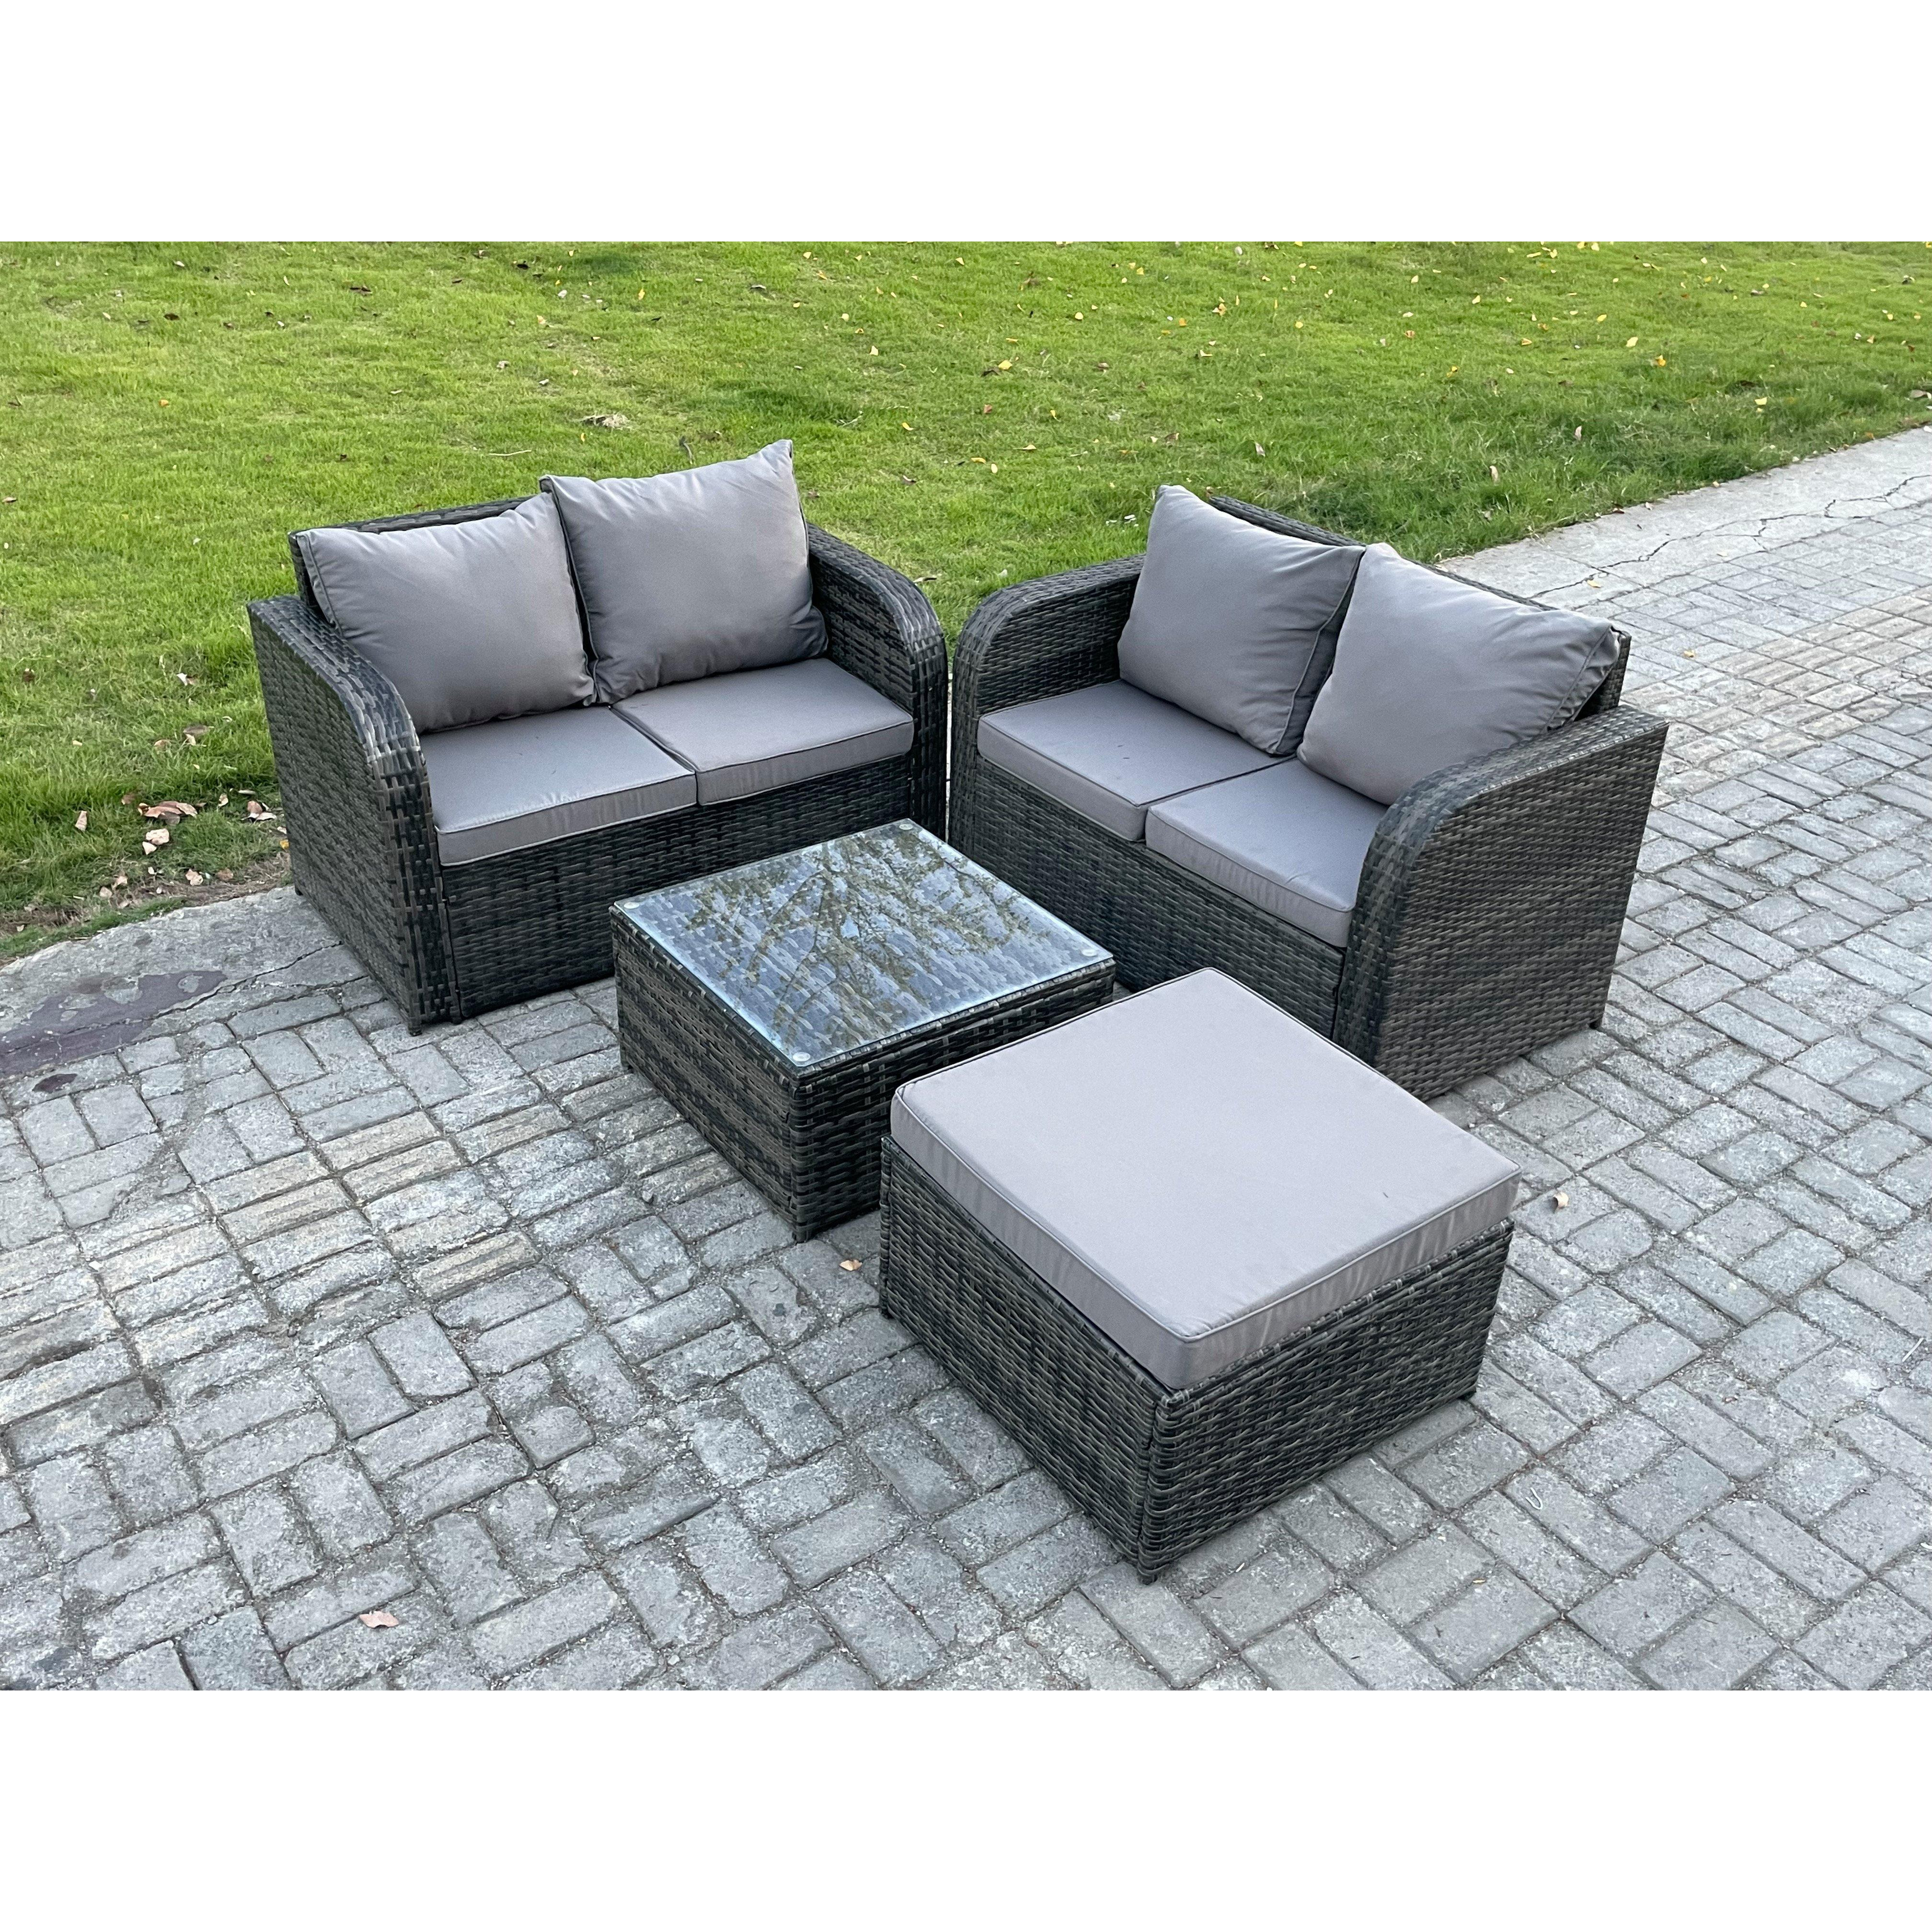 Rattan Sofa Set Outdoor Garden Furniture Set with Square Coffee Table Loveseat Sofa Big Footstool Dark Grey Mixed - image 1